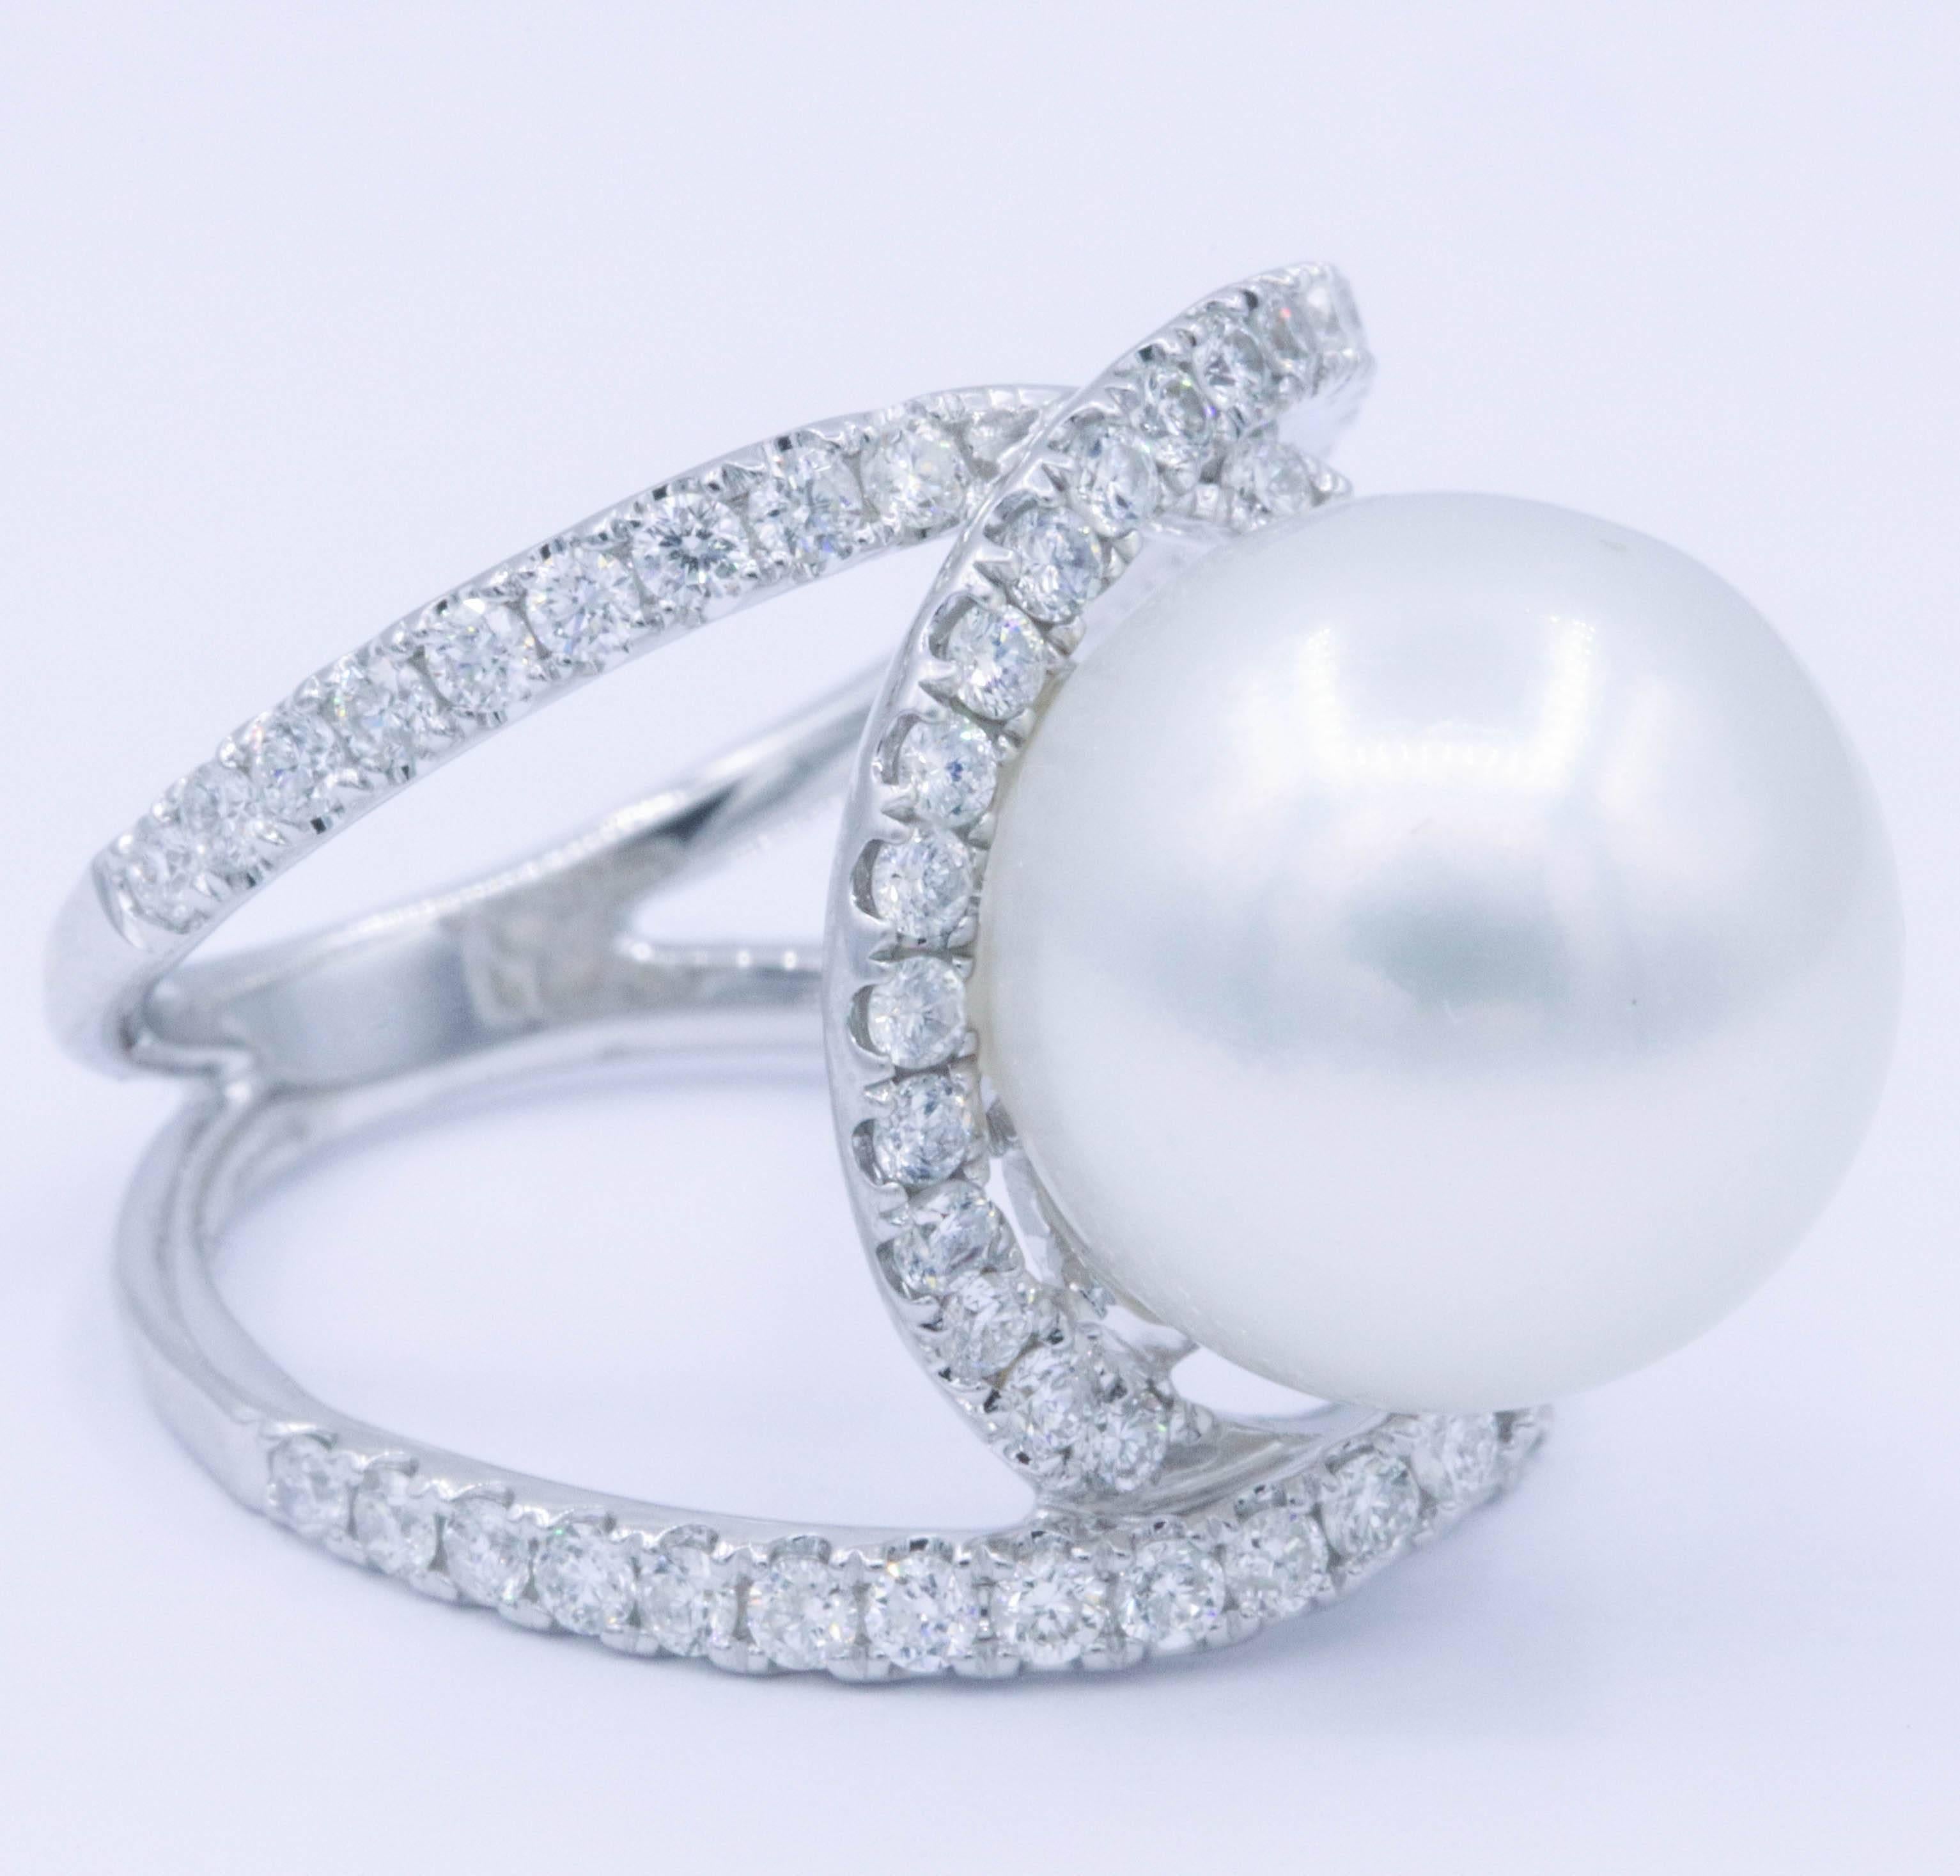 18K White Gold
Diamonds 1.05 Carats
South Sea pearl 13-14 mm